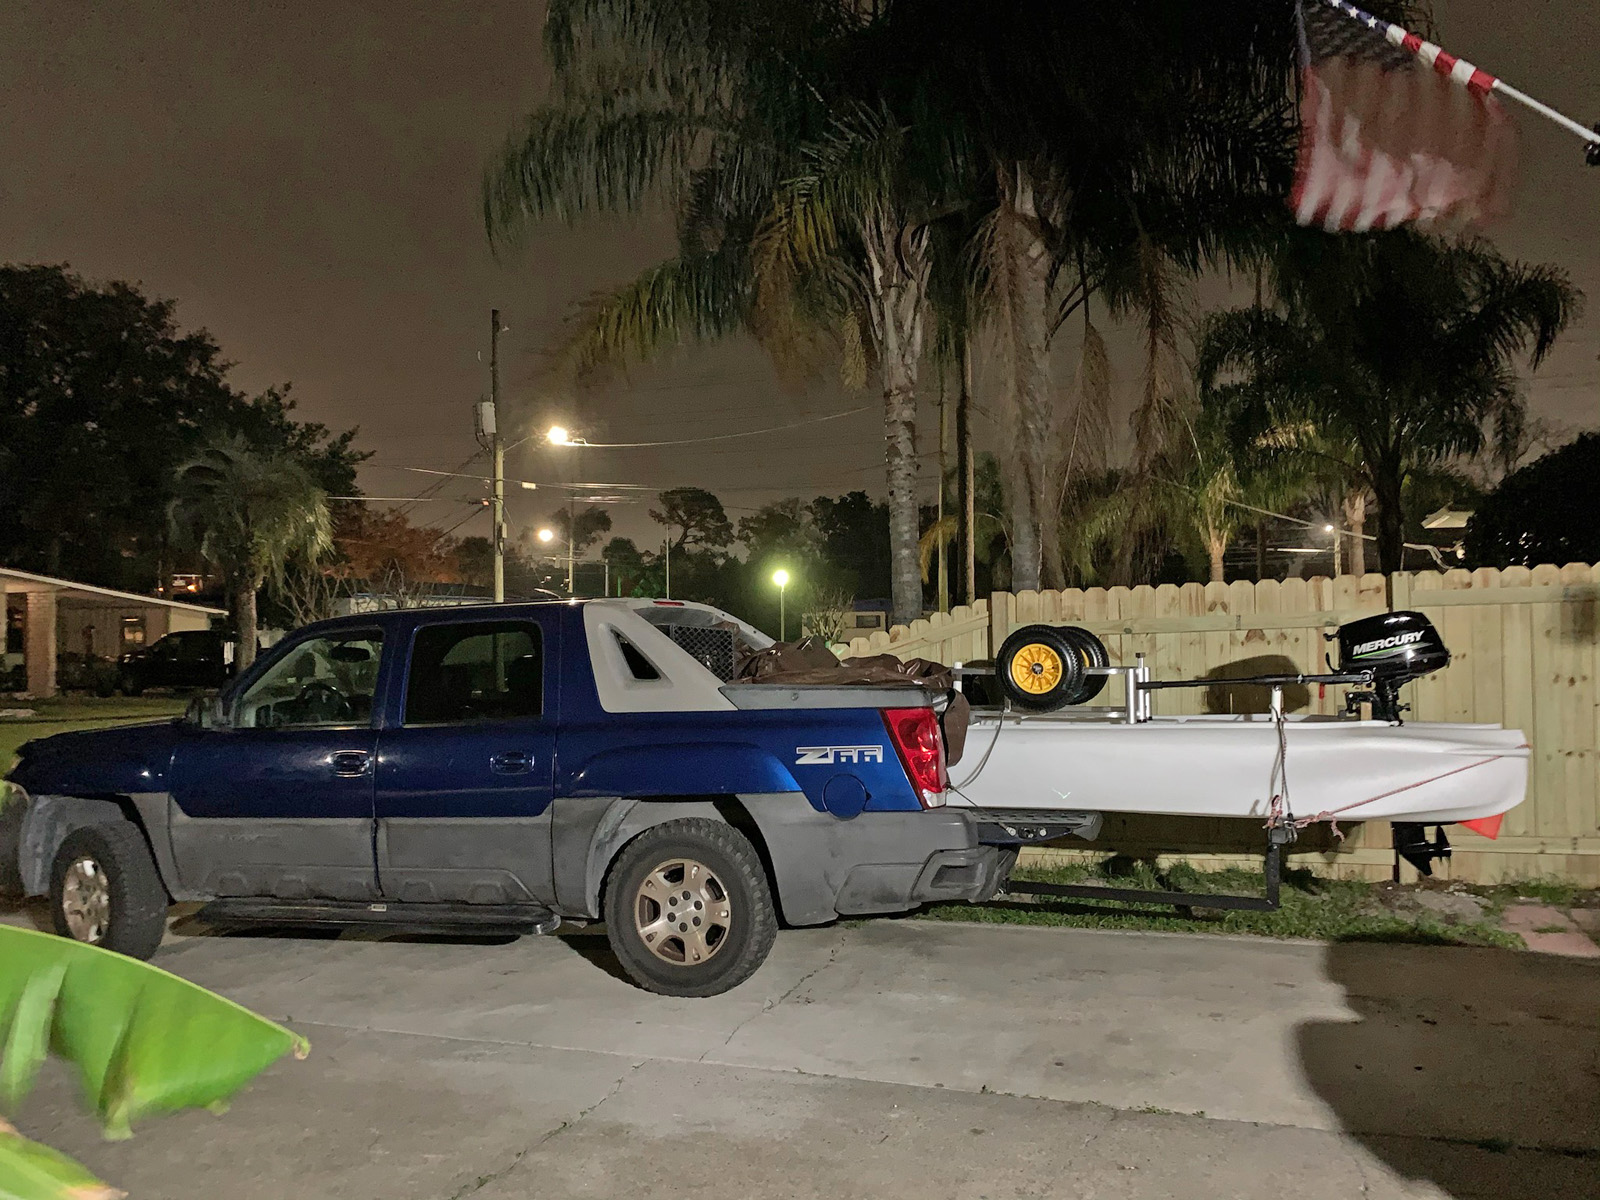 Pickup truck carrying S4 motor kayak skiff on truck bed